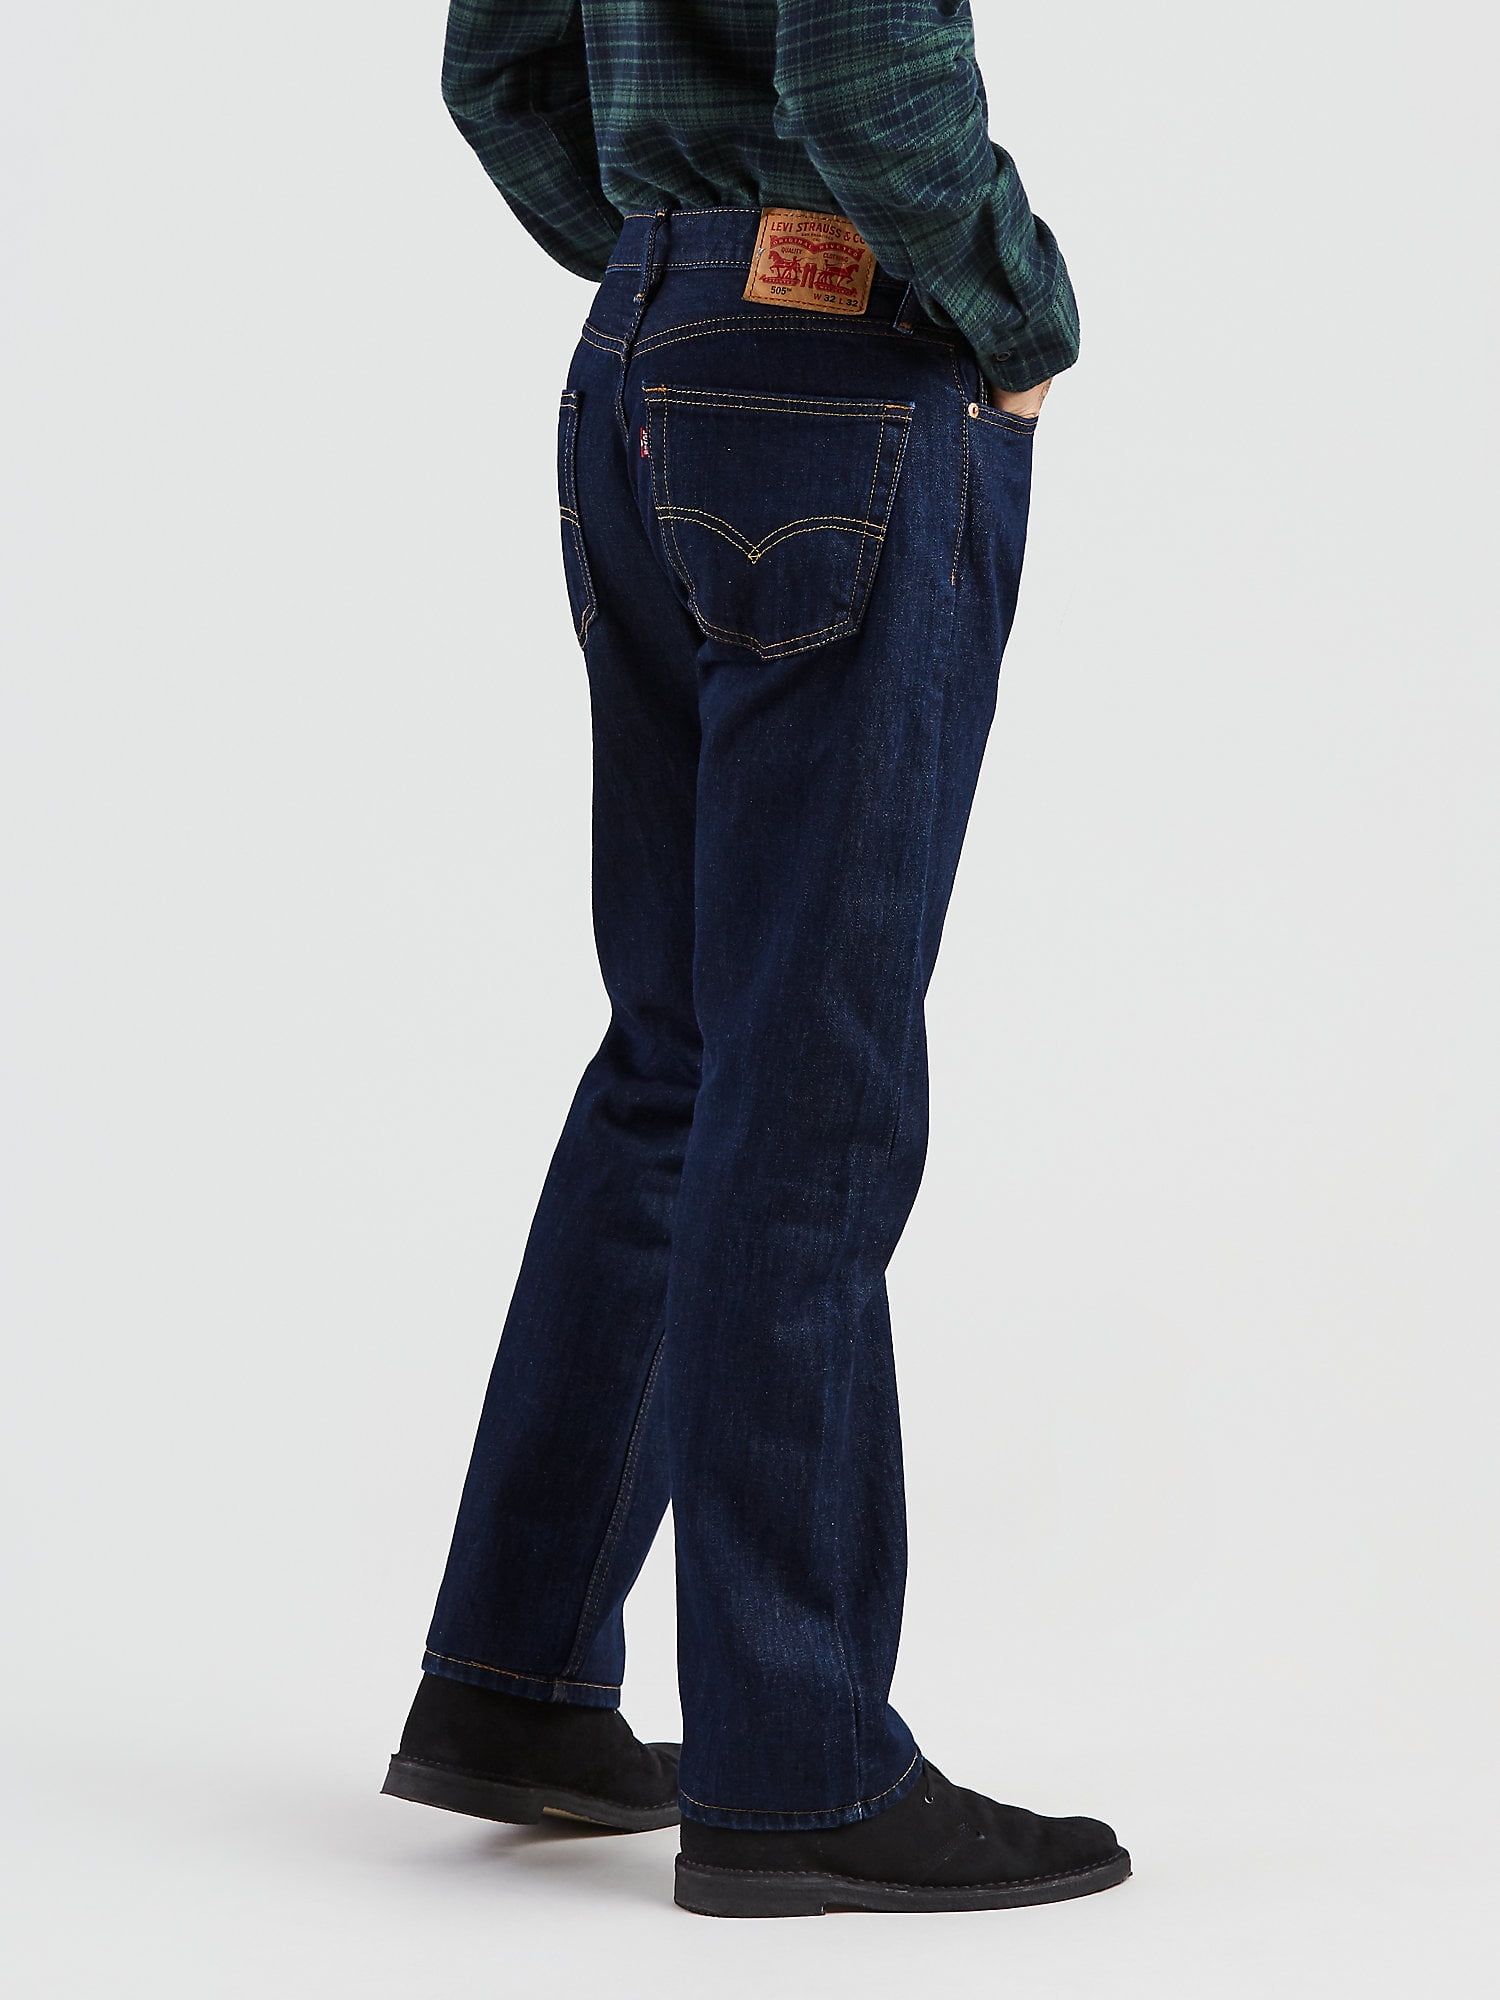 levis jeans 505 price